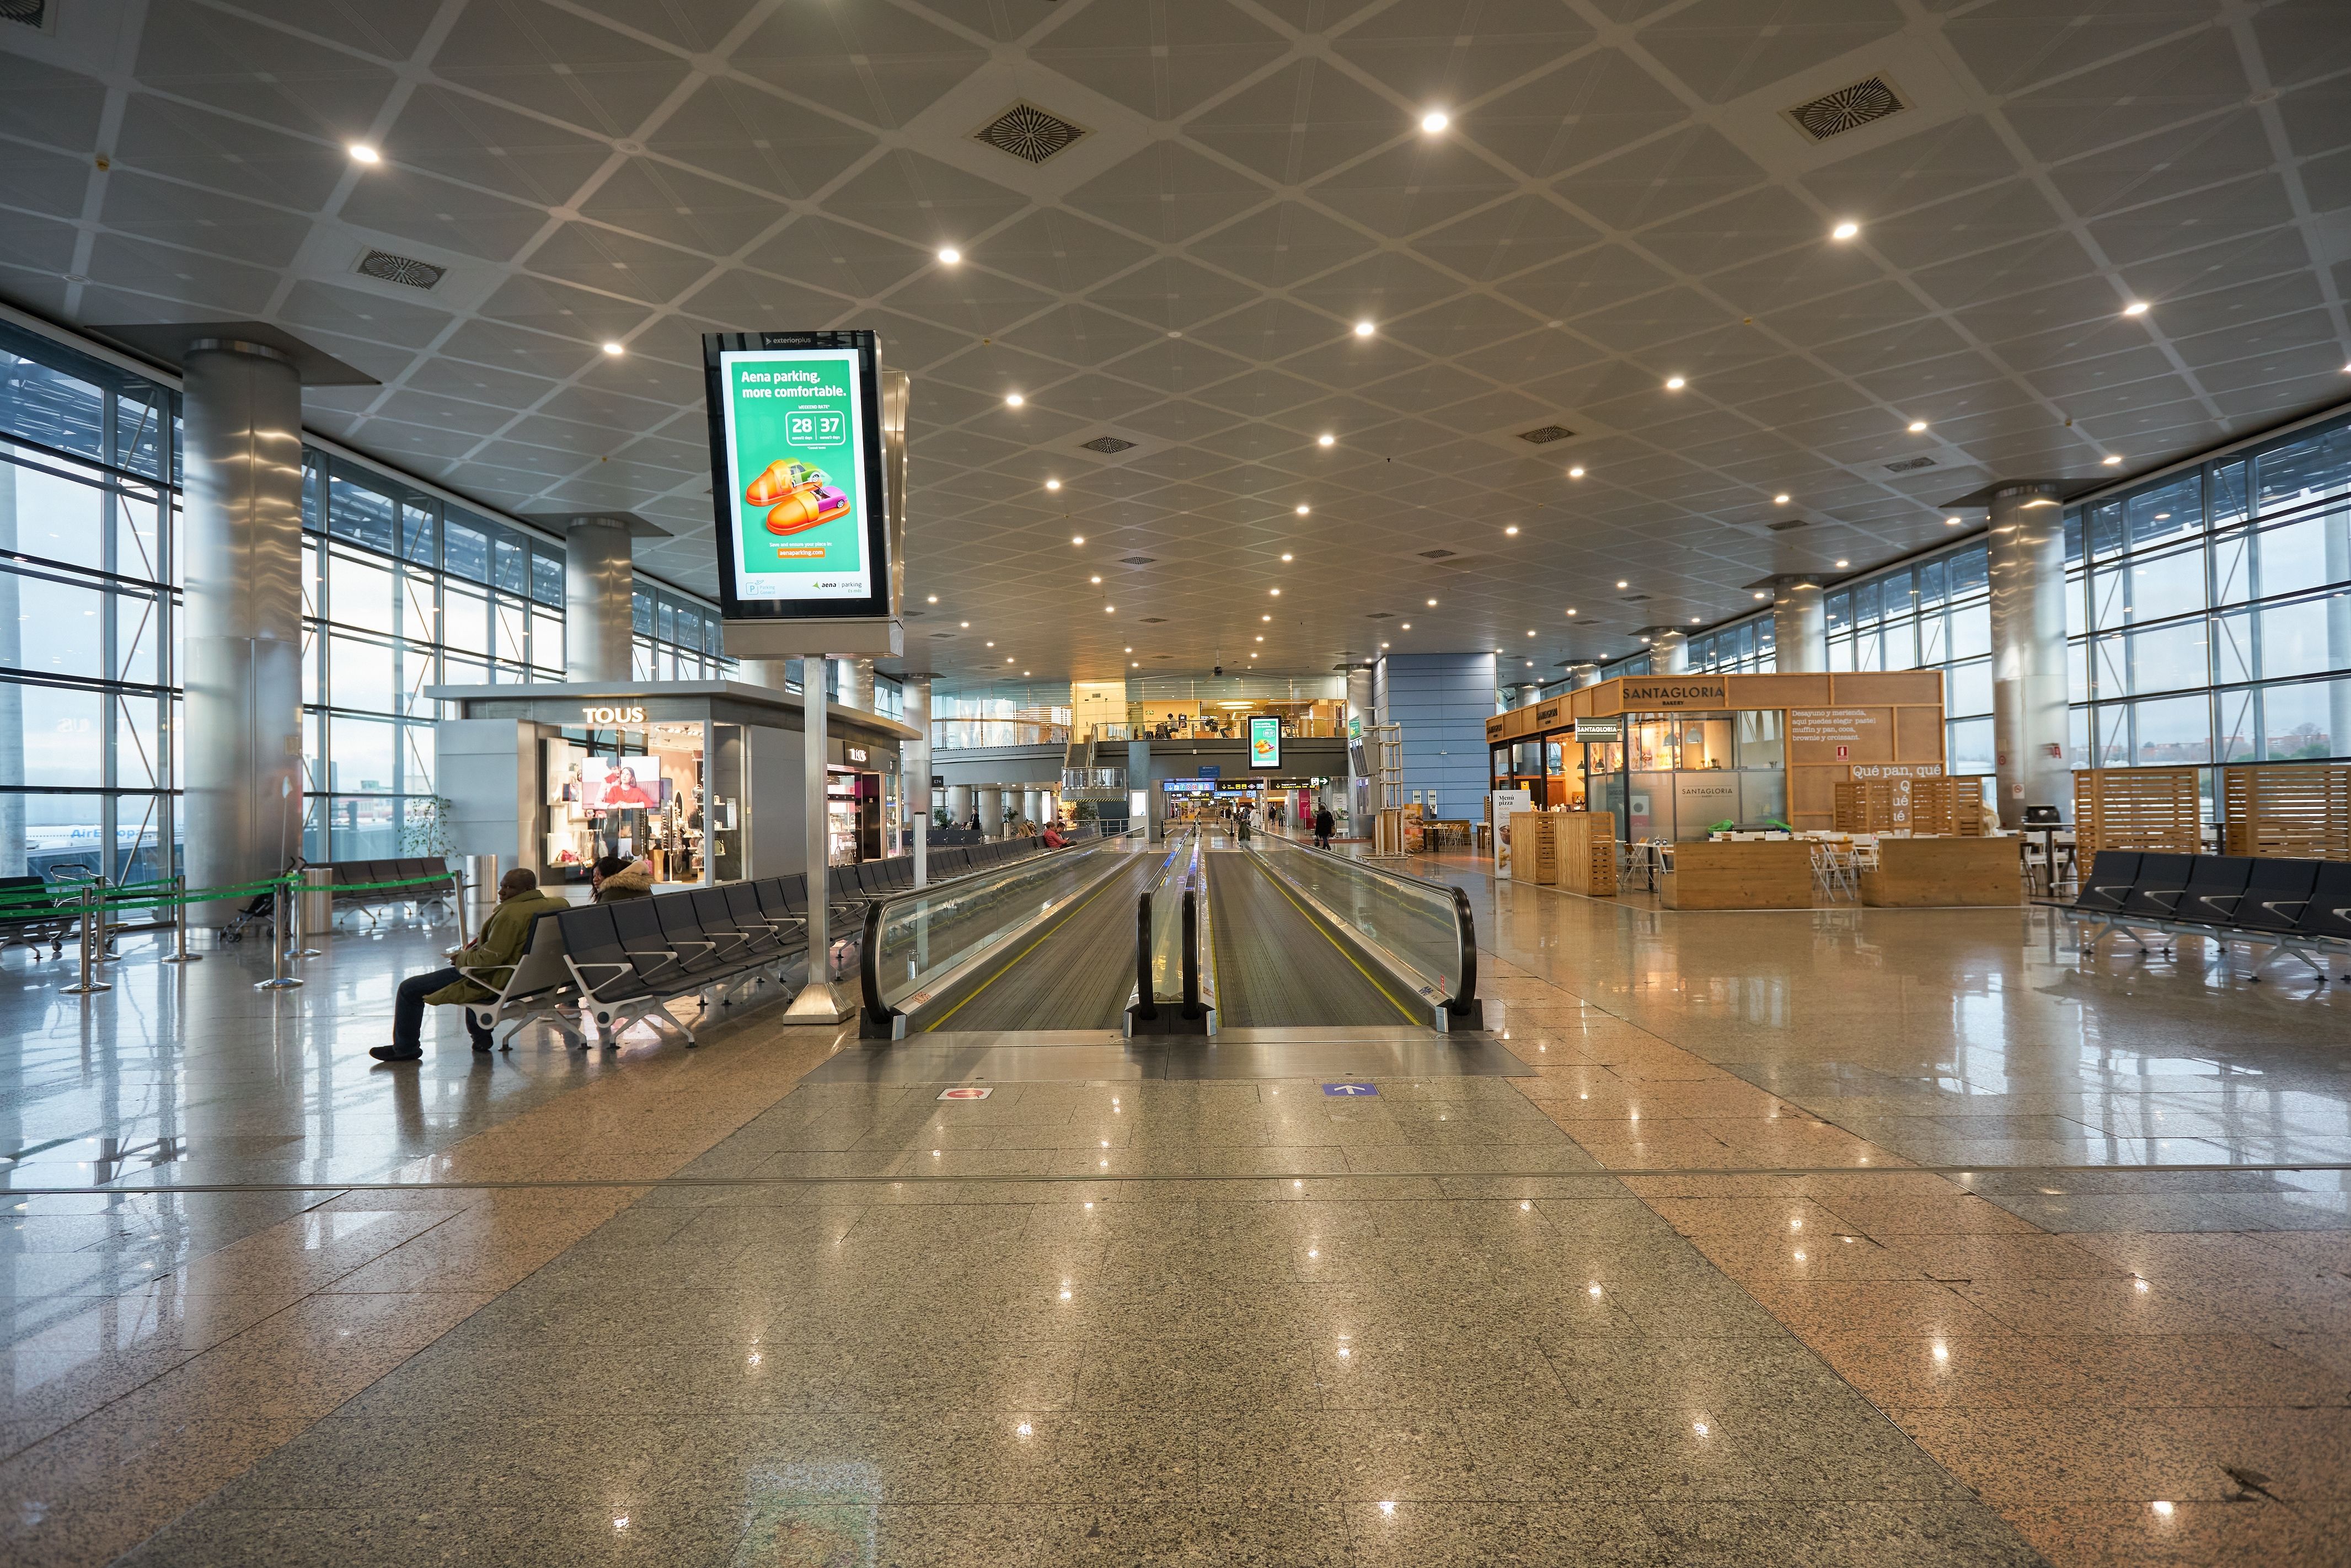 Inside Madrid airport's main terminal building.